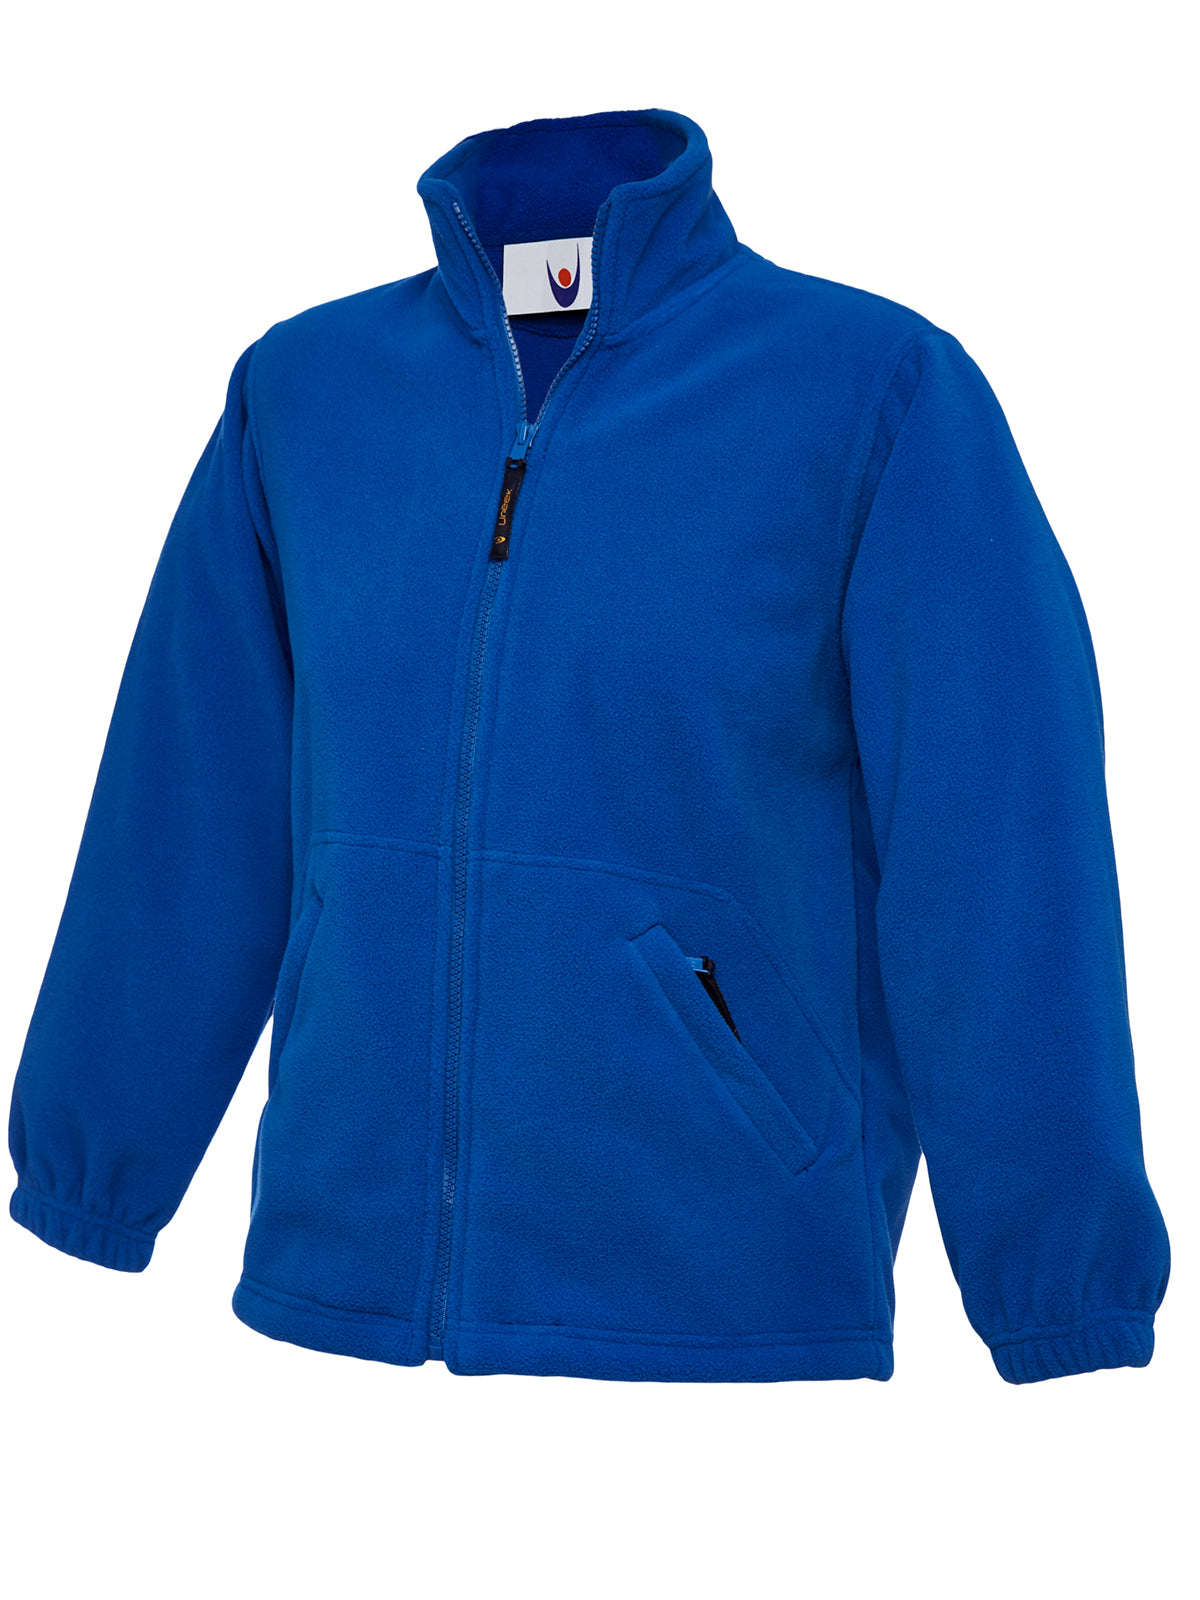 Uneek Childrens Full Zip Micro Fleece Jacket UC603 - Royal